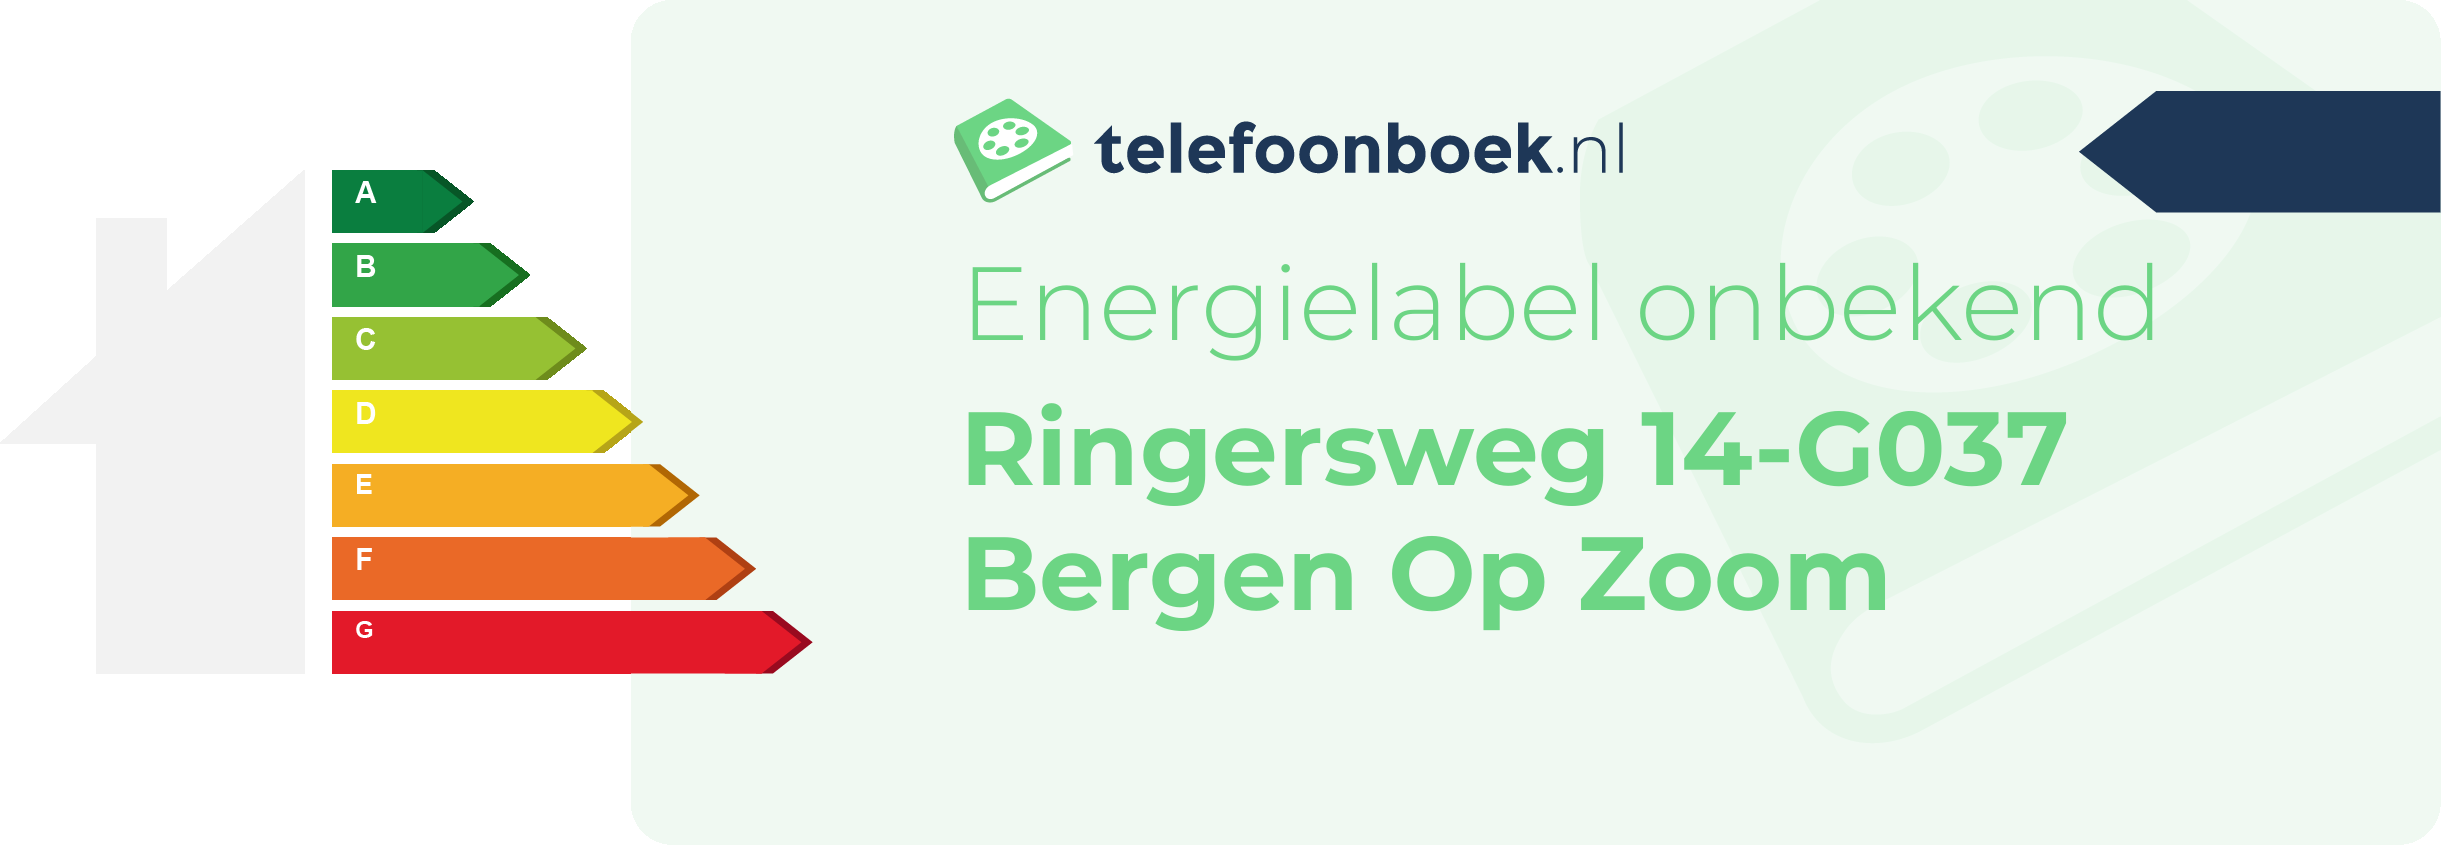 Energielabel Ringersweg 14-G037 Bergen Op Zoom